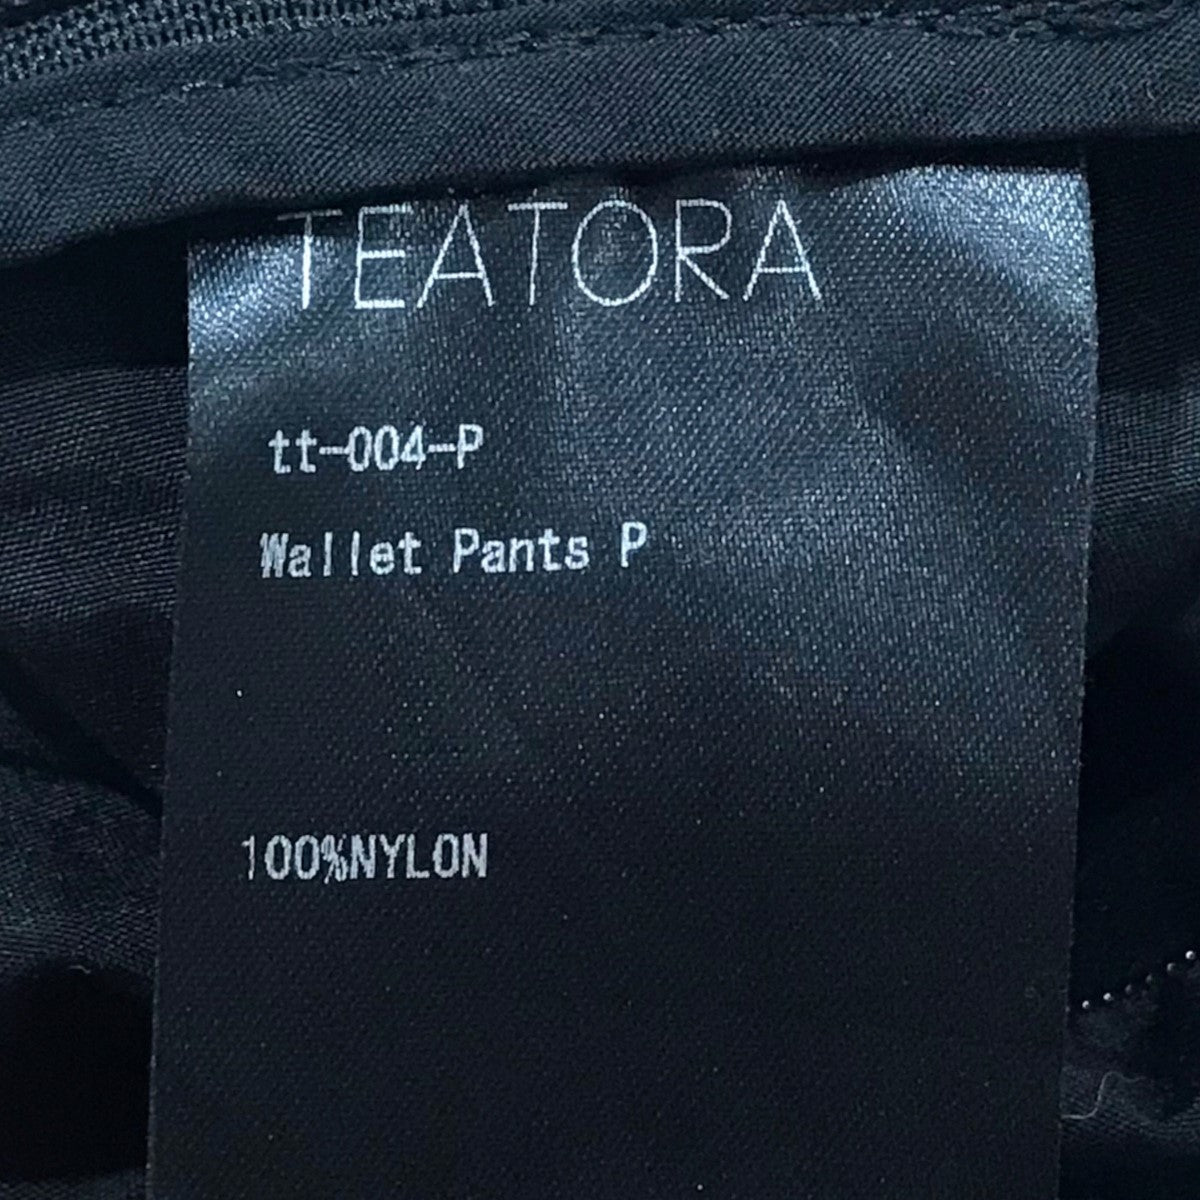 TEATORA(テアトラ) イージーパンツ WALLET PANTS - packable ...